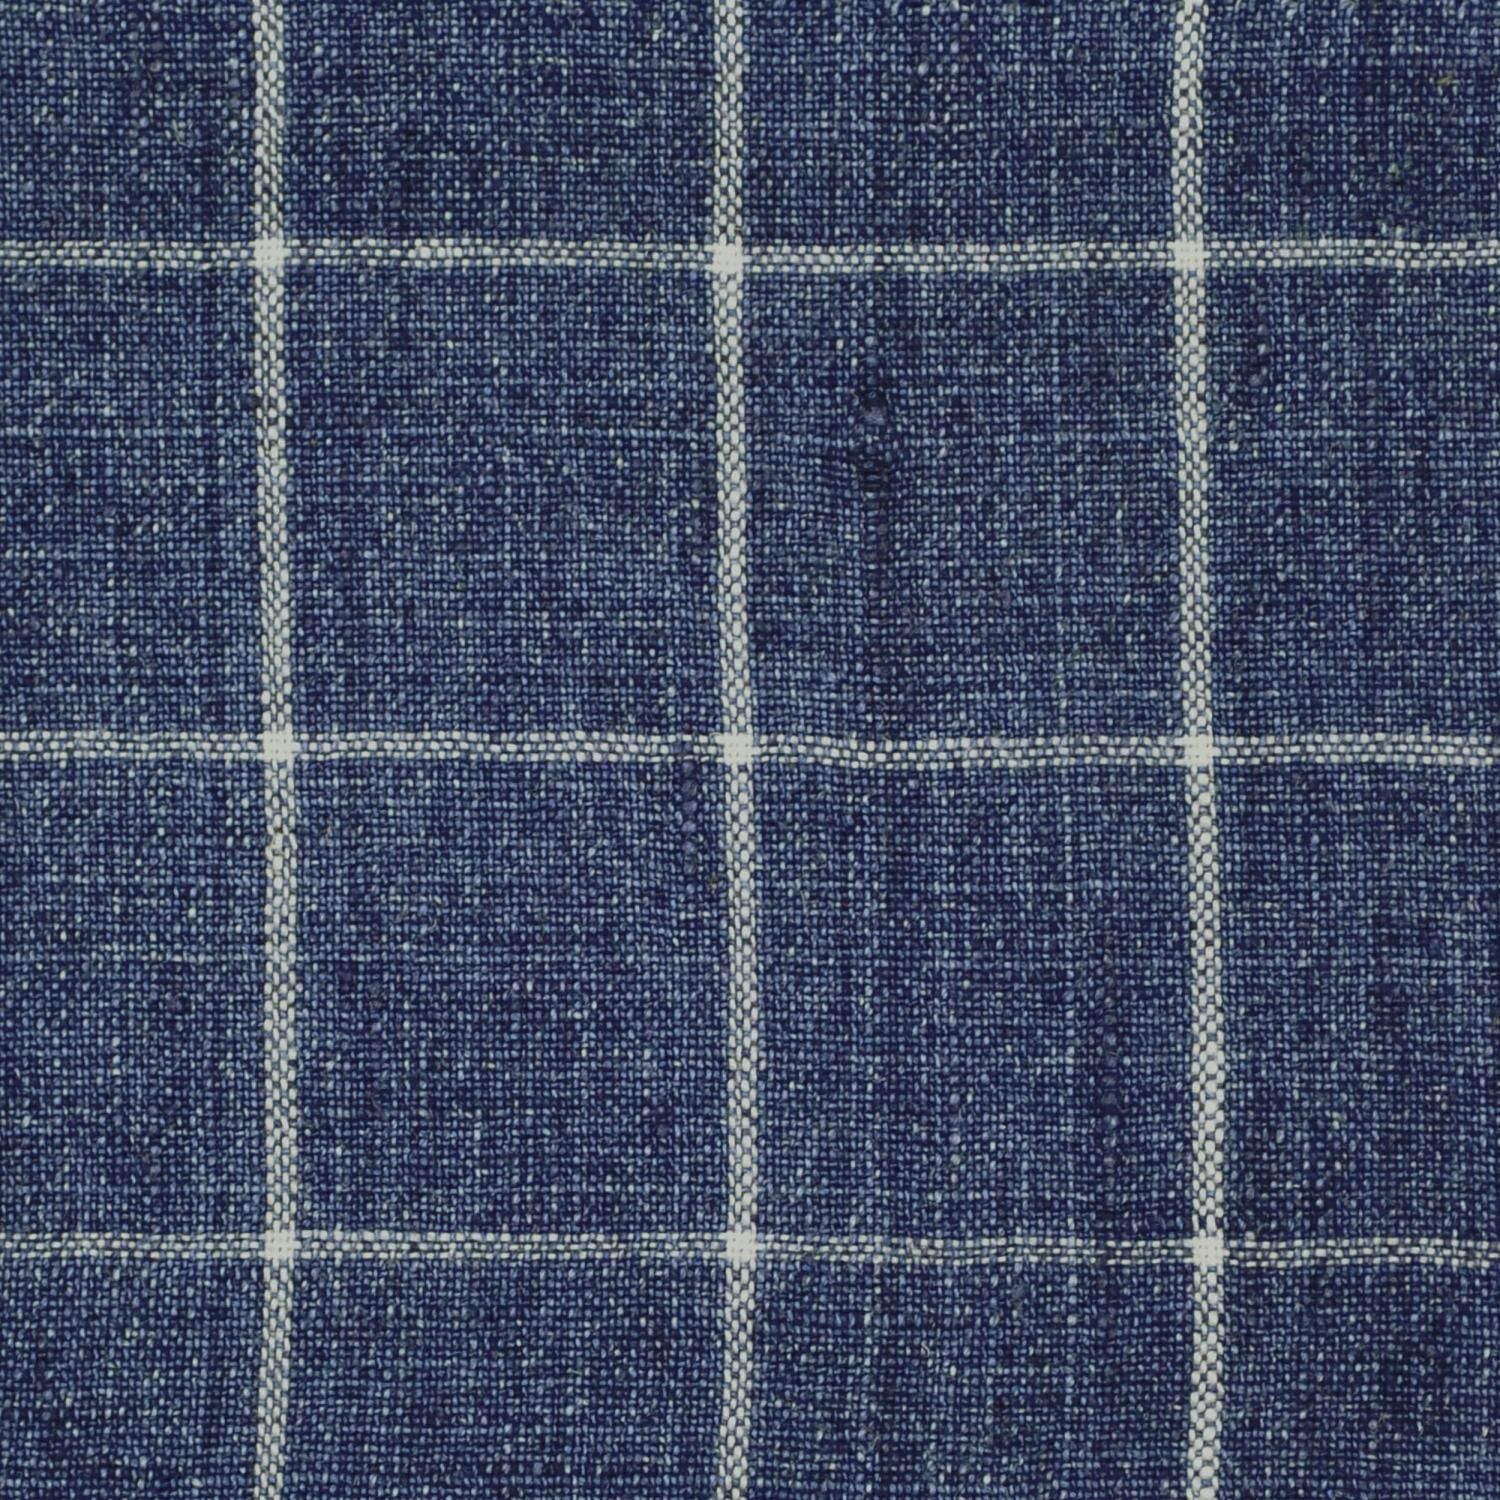 SENDER/INDIGO - Multi Purpose Fabric Suitable For Drapery